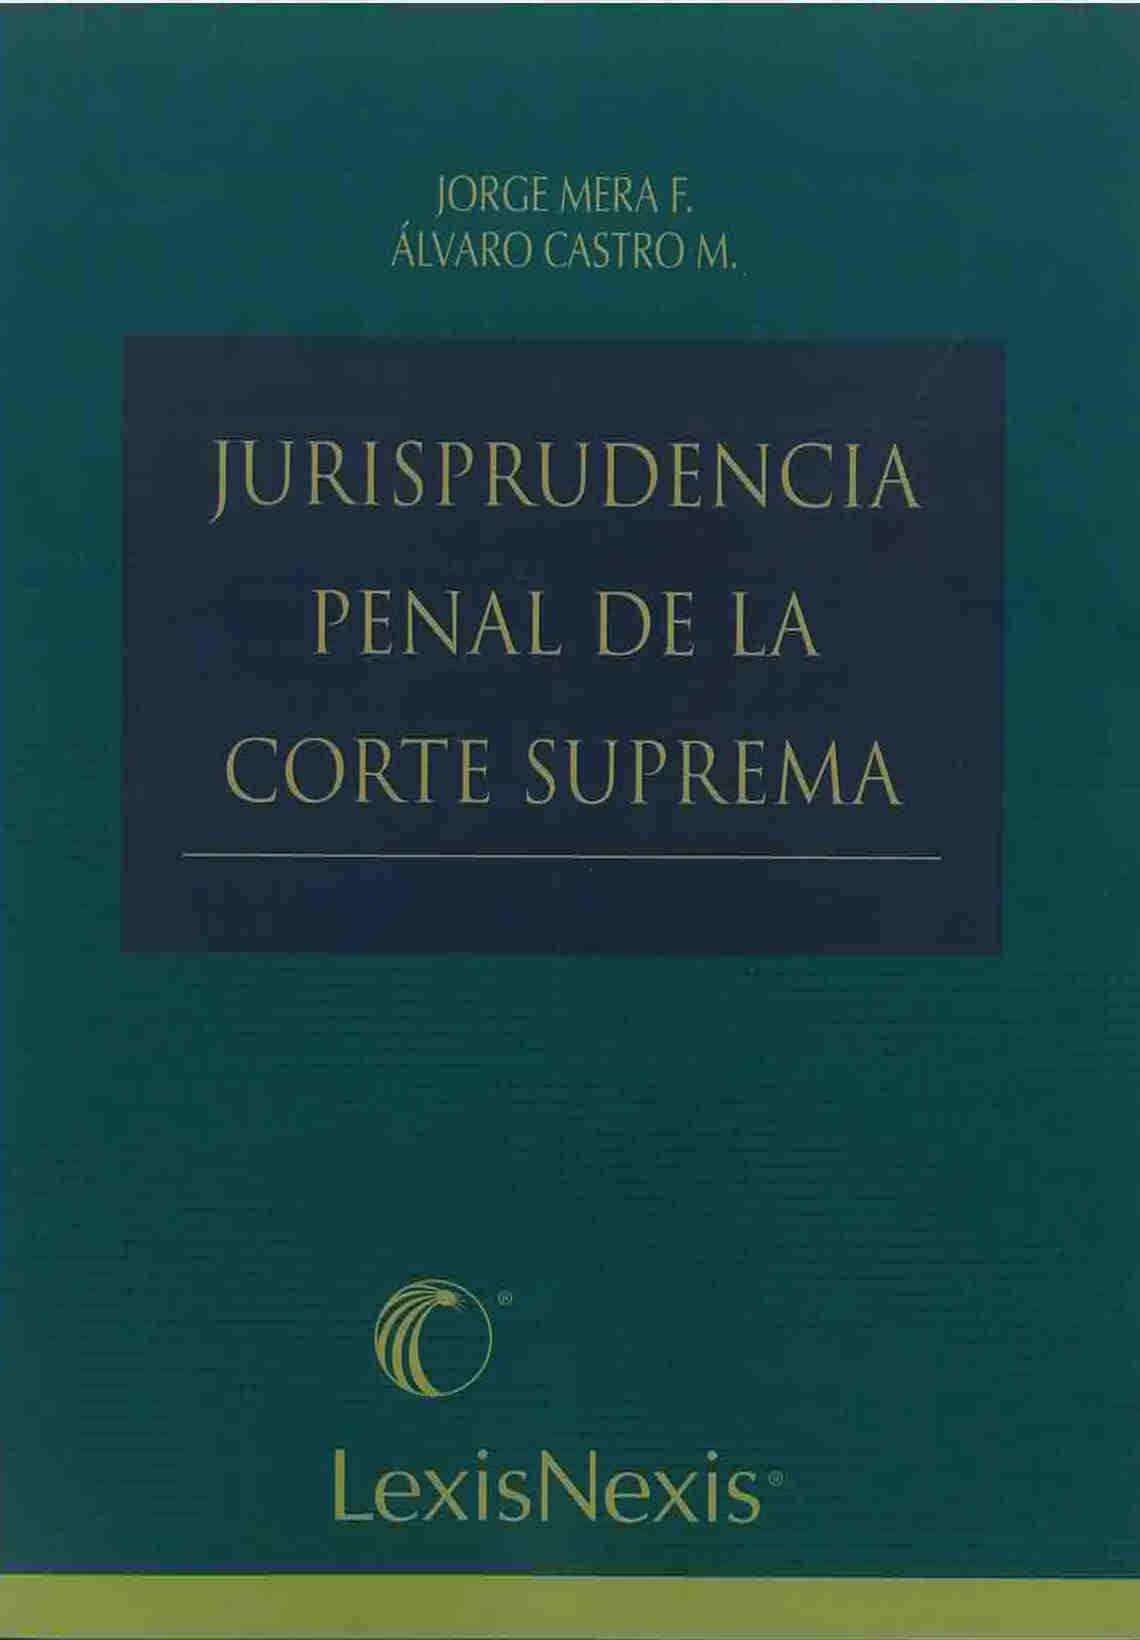 Jurisprudencia penal de la corte suprema